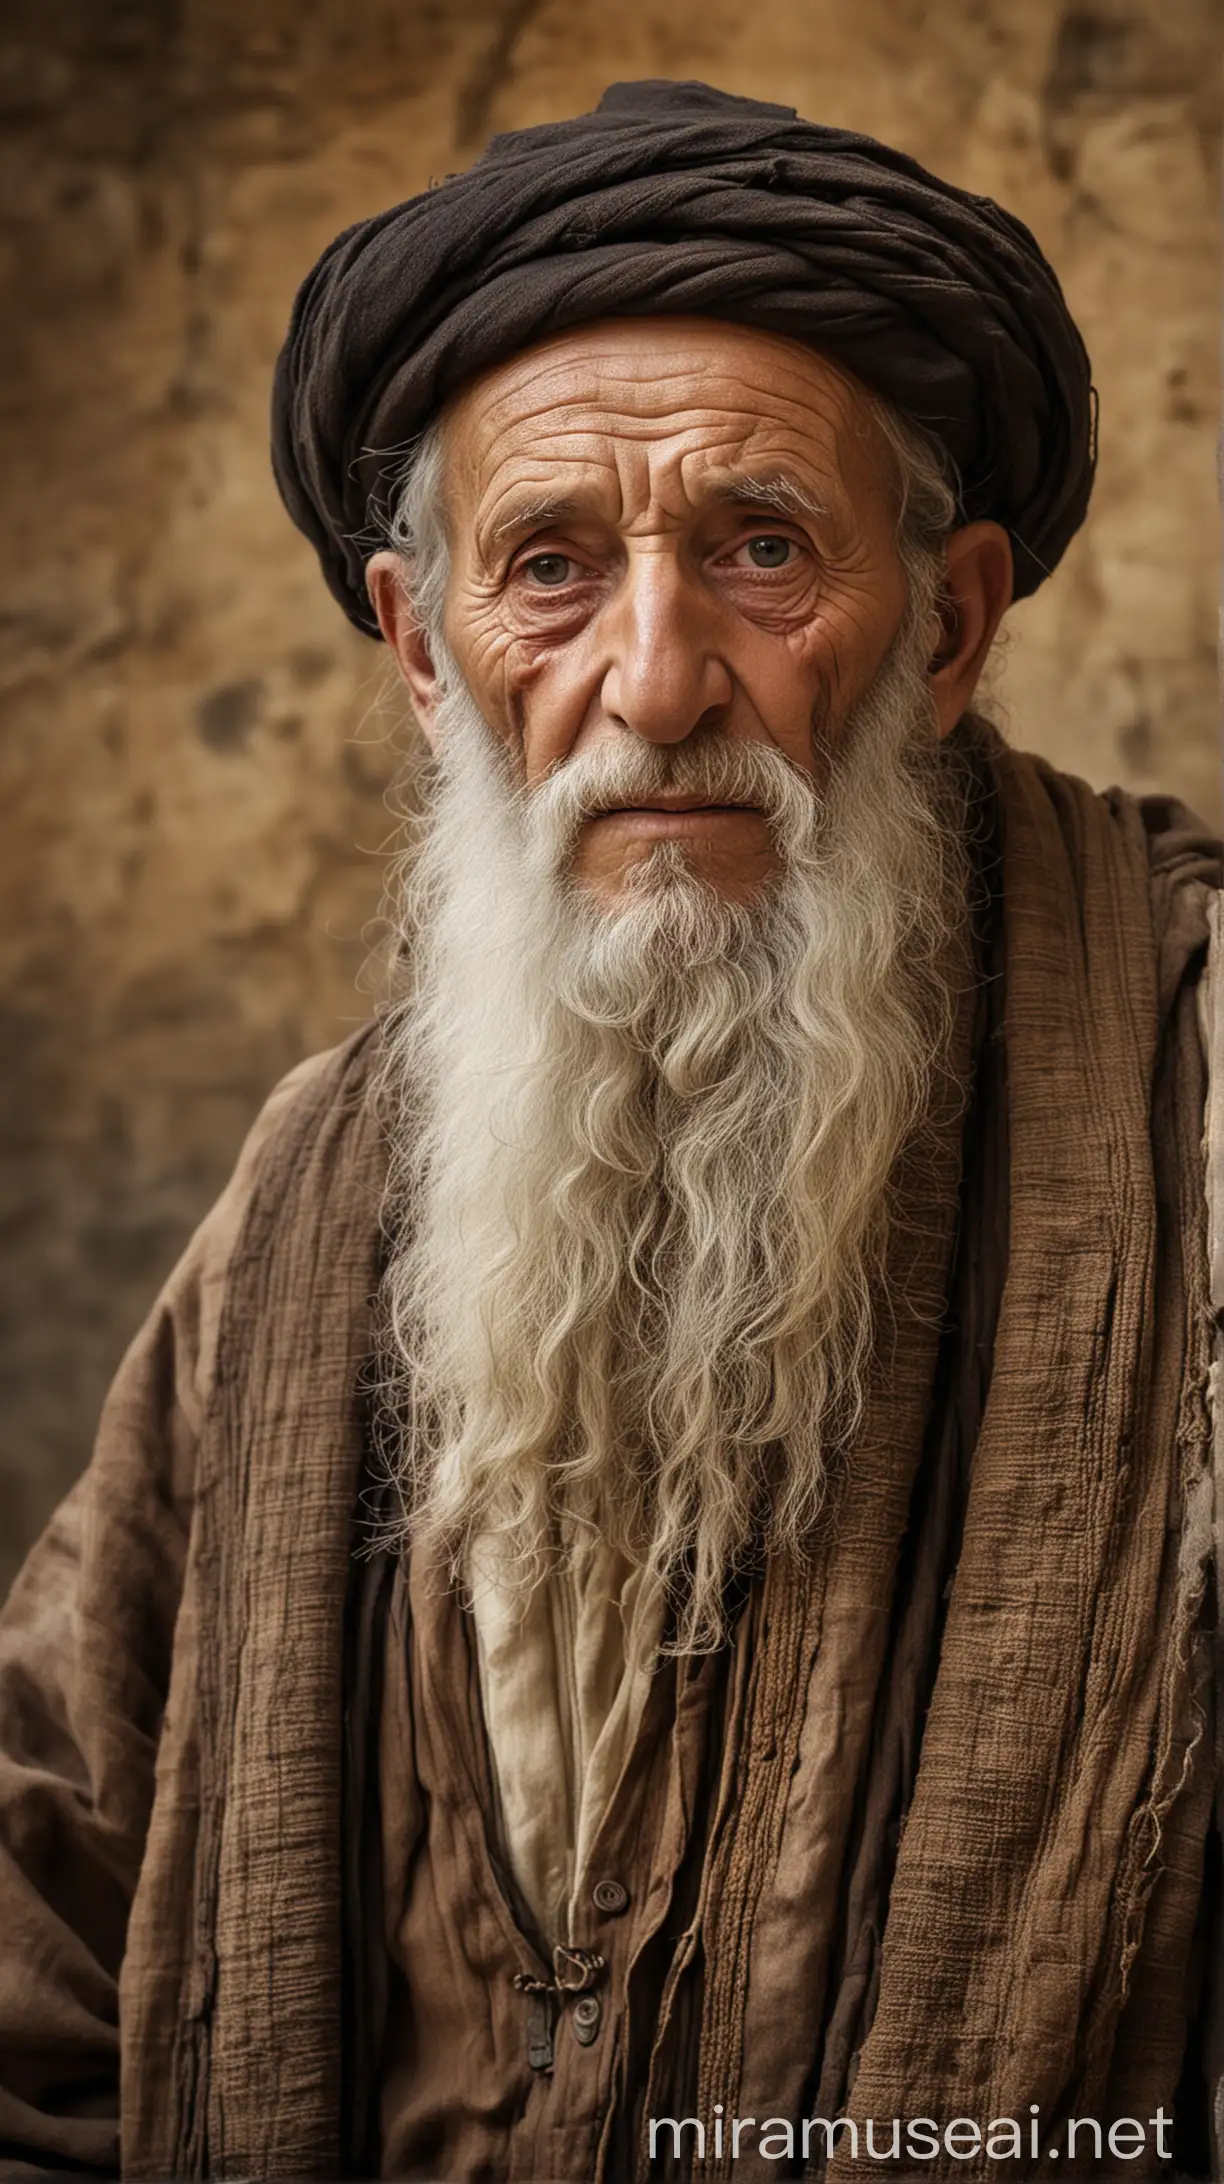 Elderly Jewish Man in Ancient Setting